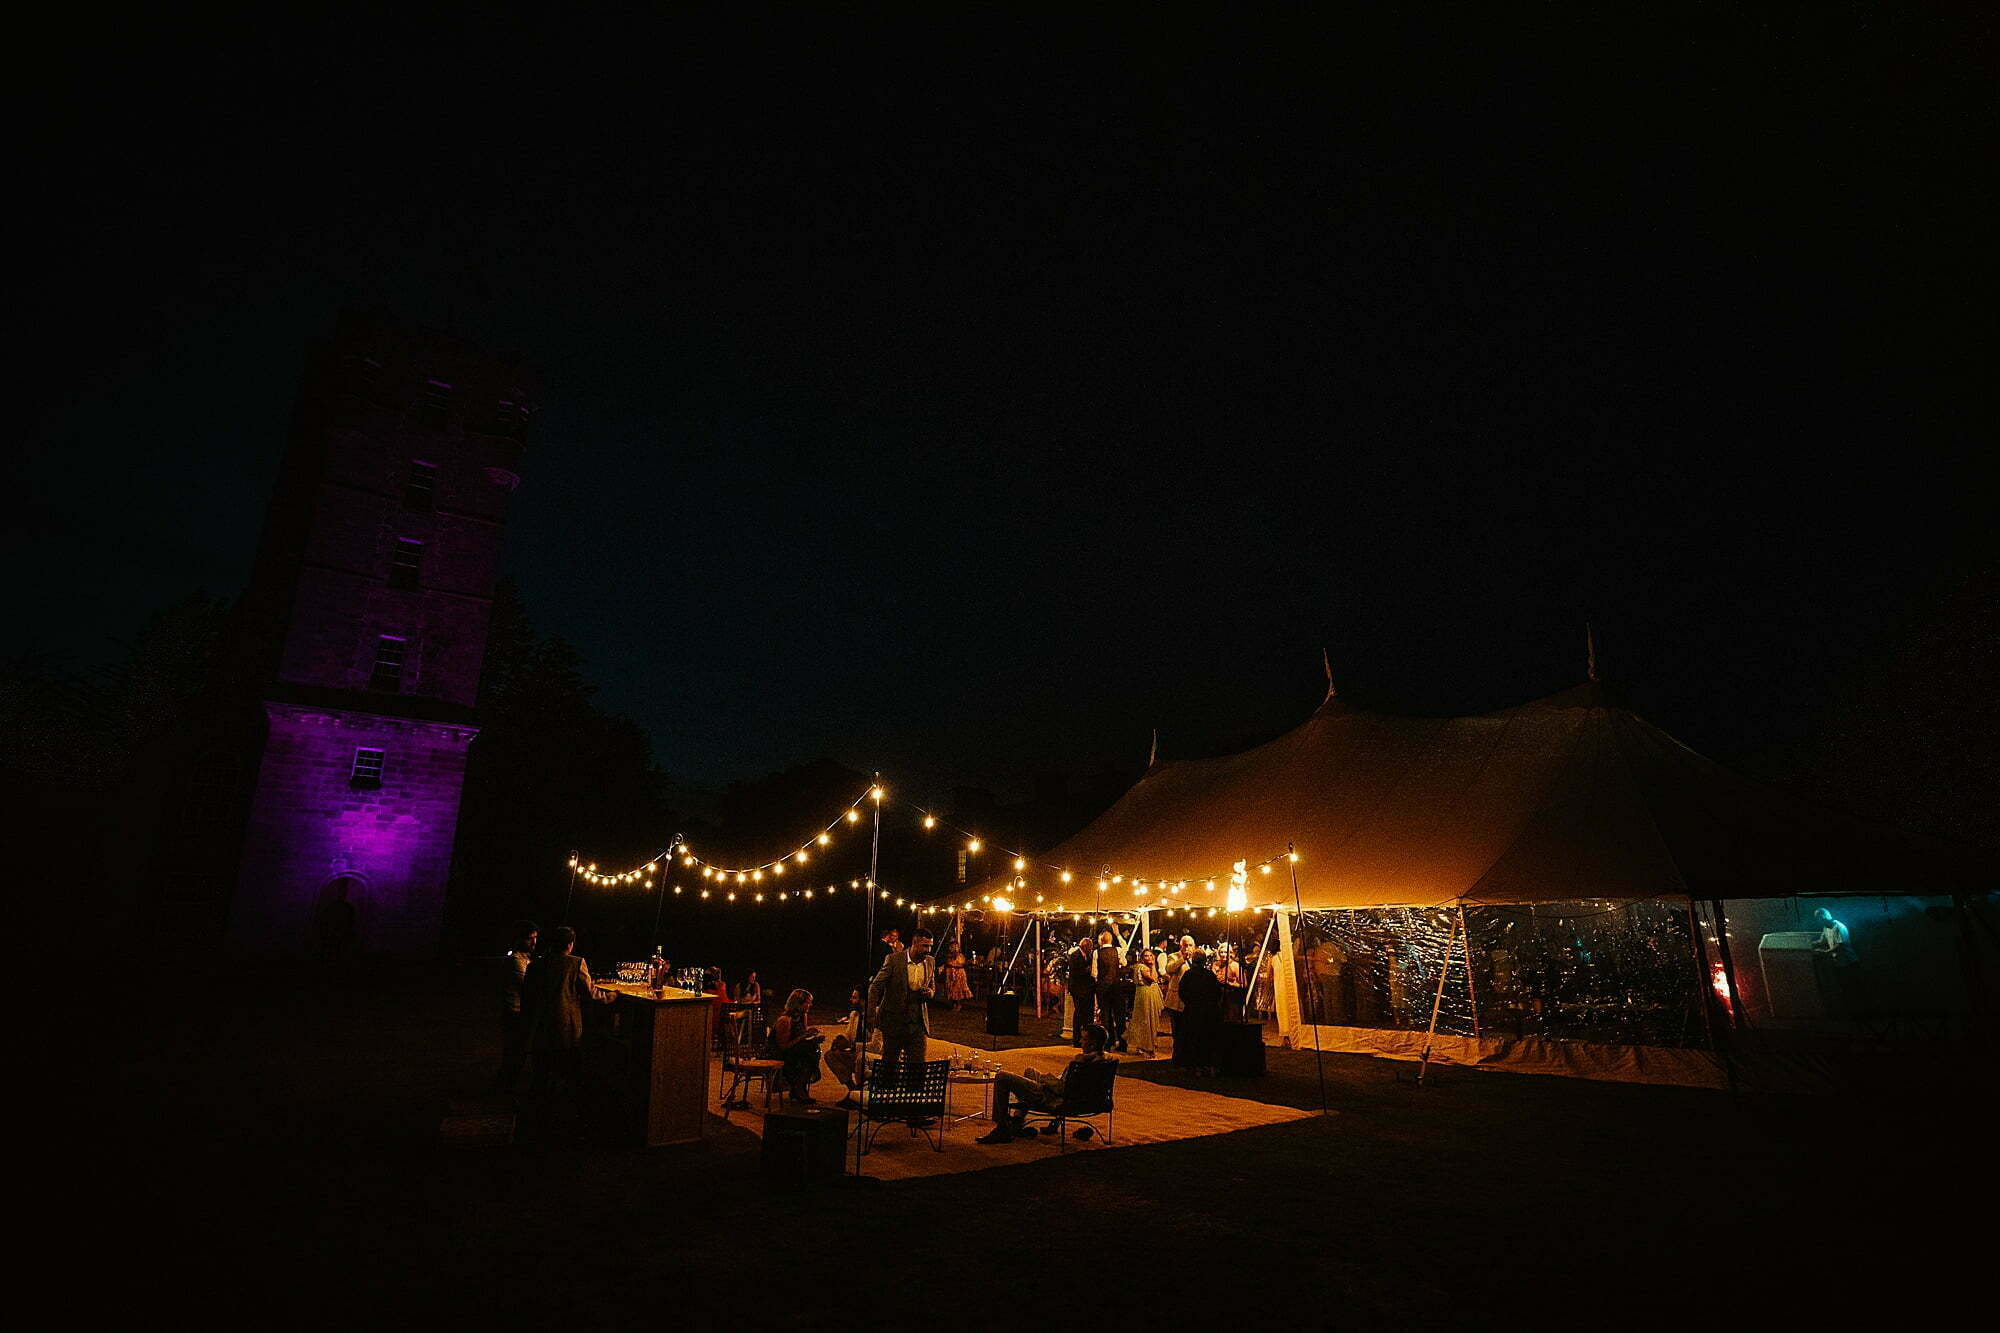 gordon castle marquee festoon lights lighting